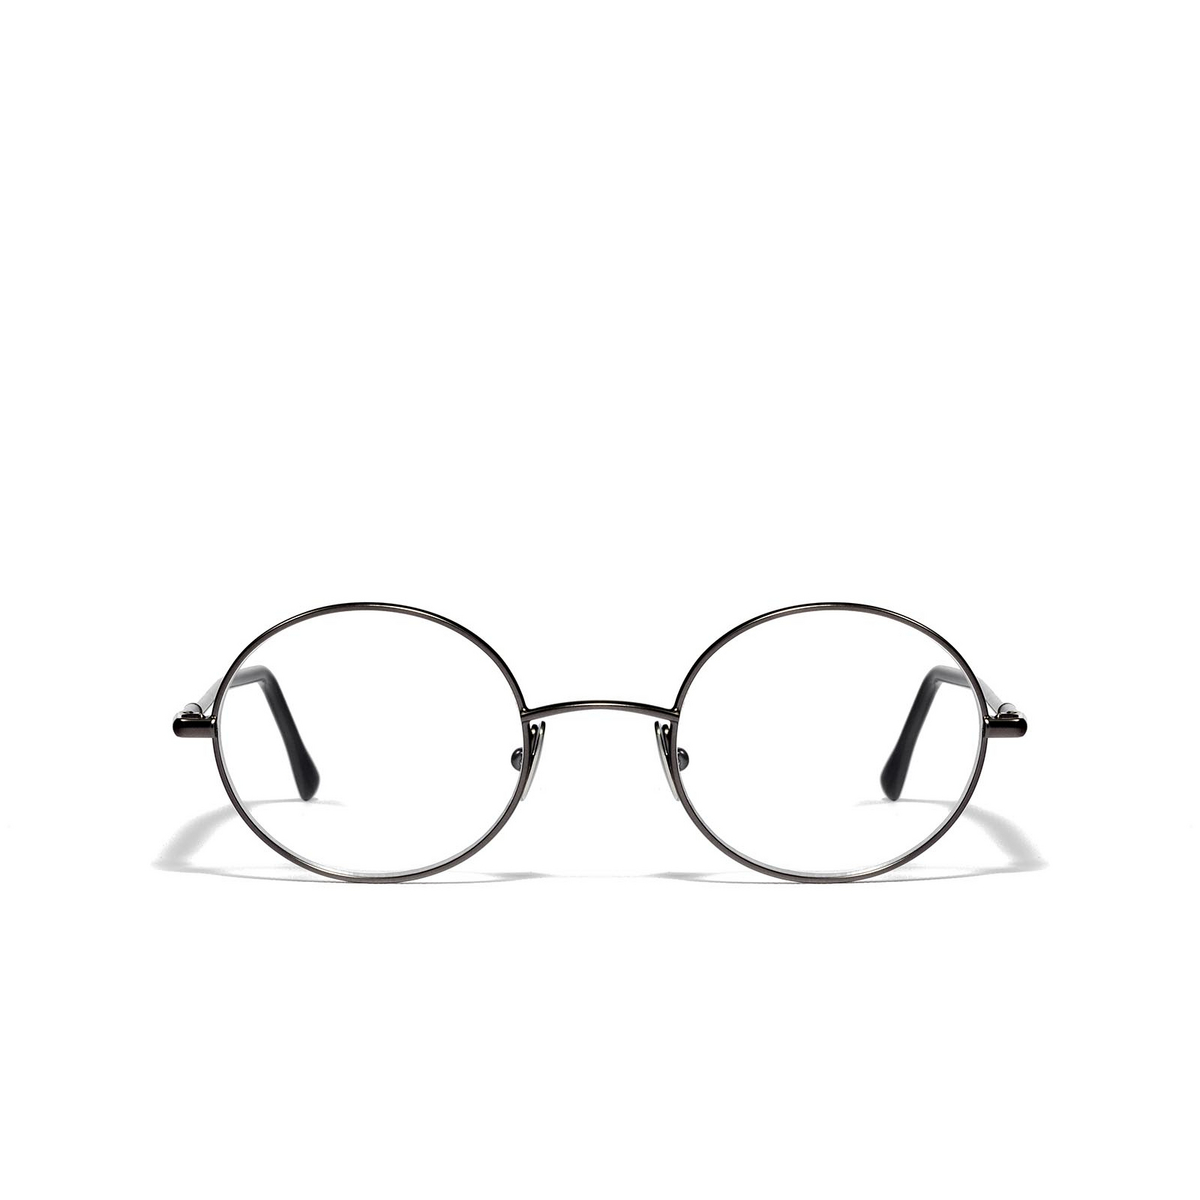 L.G.R BOWLES Eyeglasses 04 Matte Grey - front view